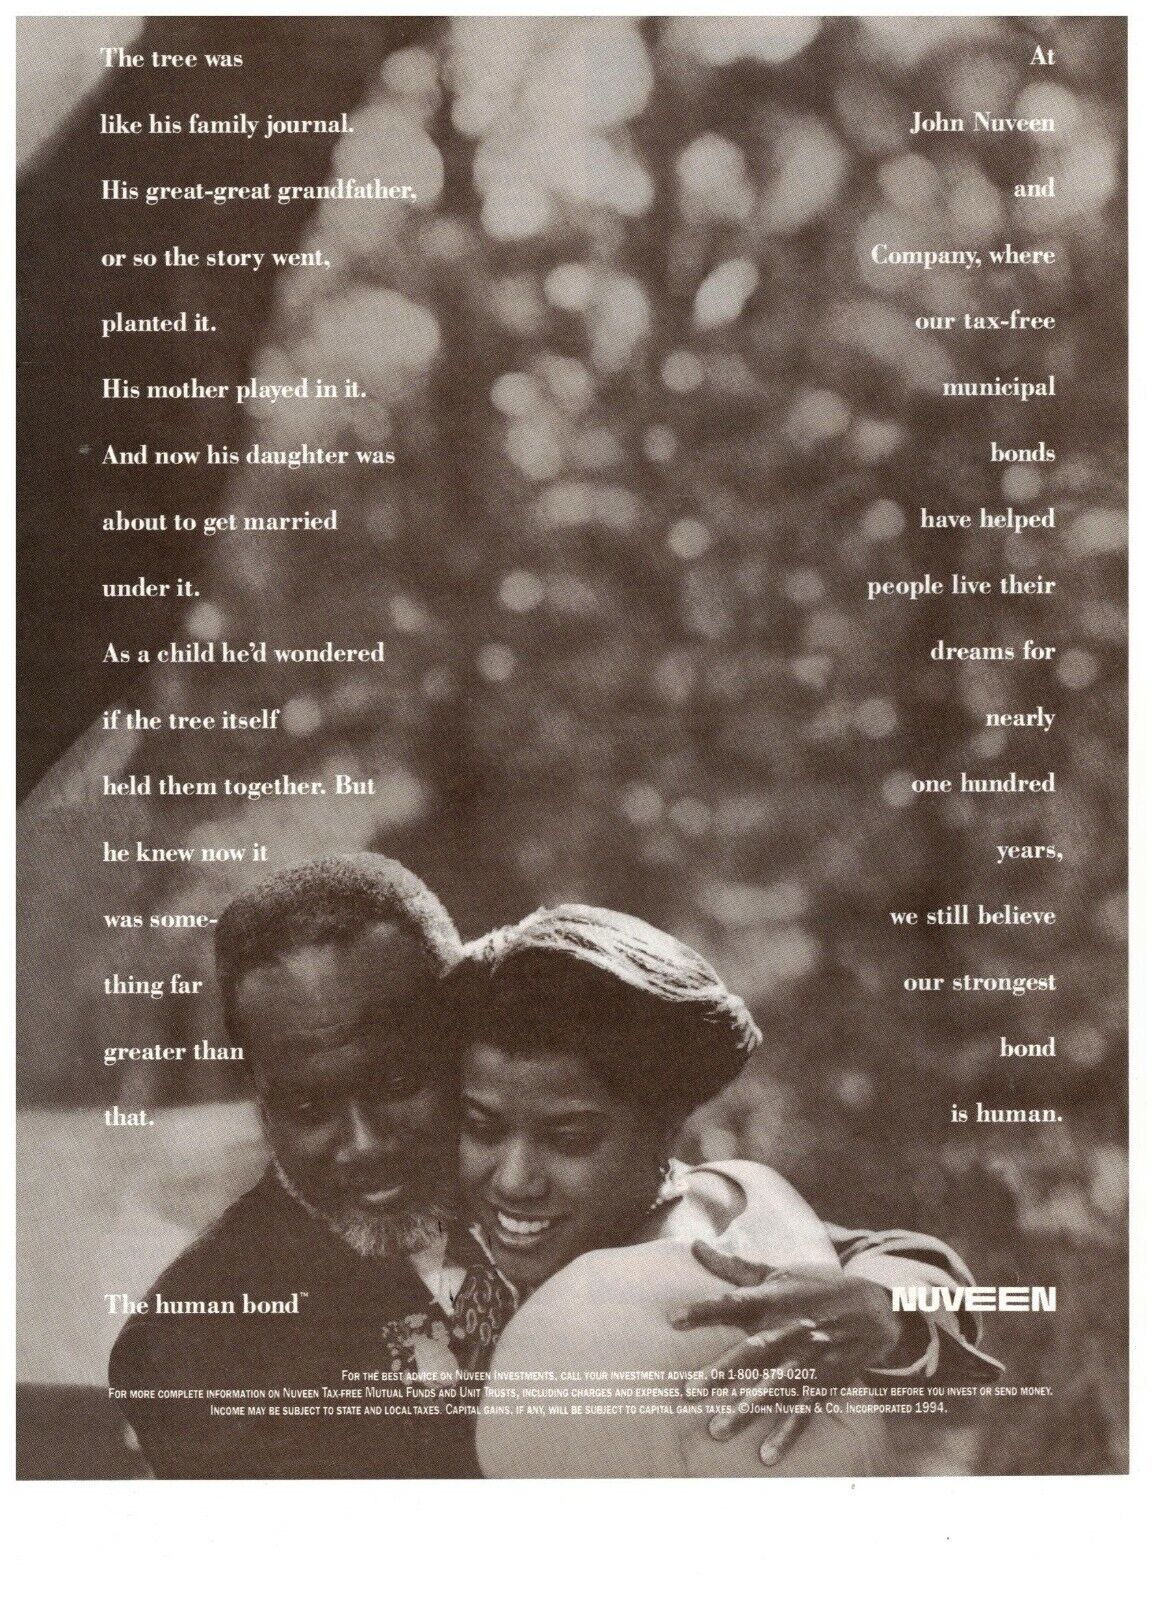 Nuveen The Human Bond Tree Was Like Family Journal Vintage 1995 Print Ad